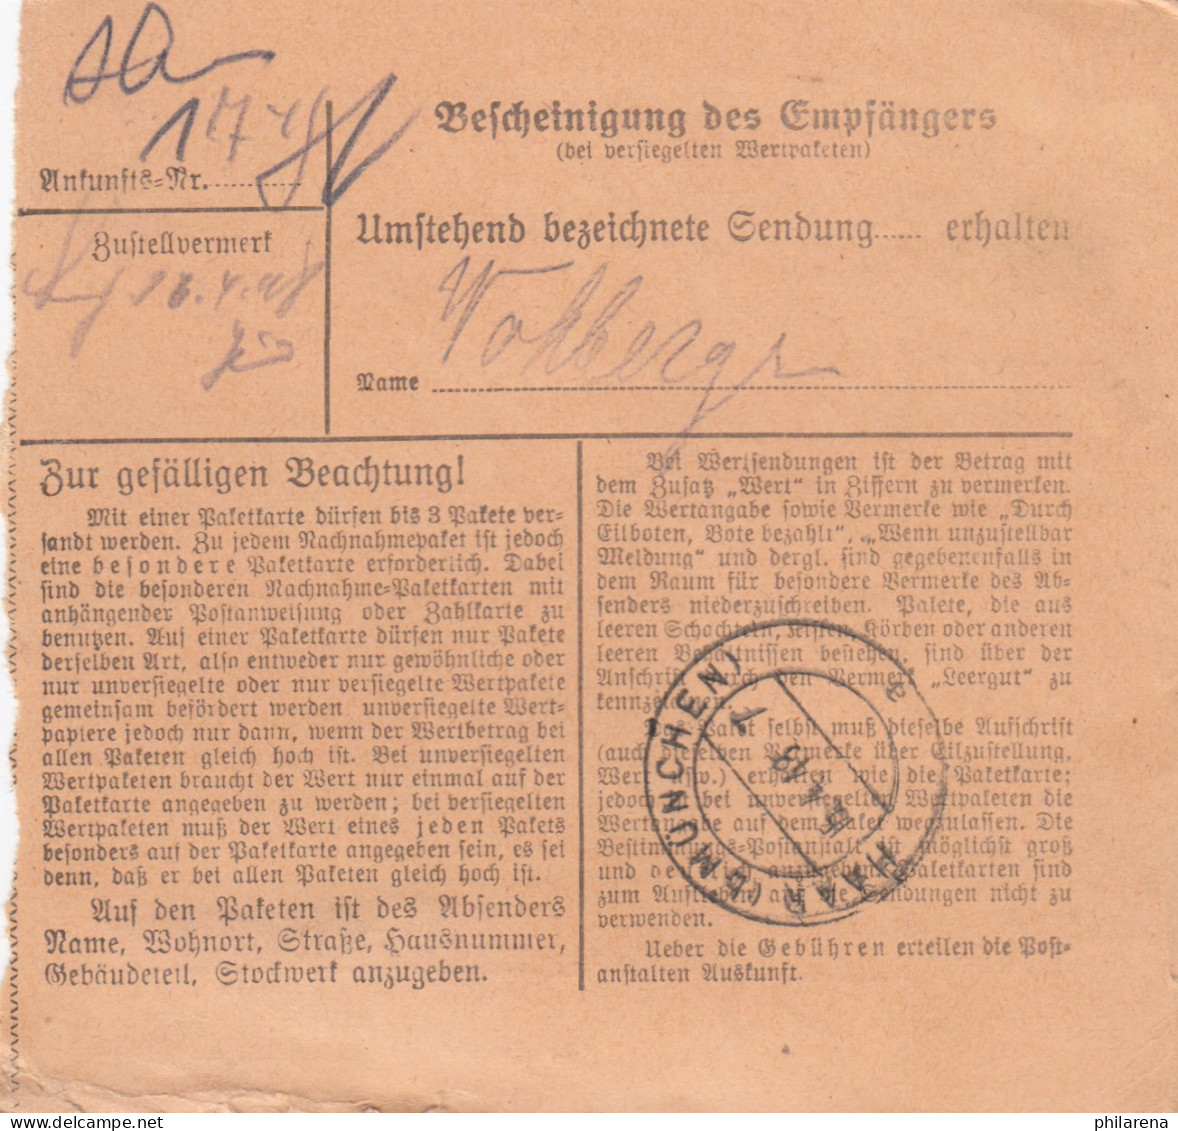 Paketkarte 1948: Donauwörth Nach Neukeferloh Post Haar - Lettres & Documents